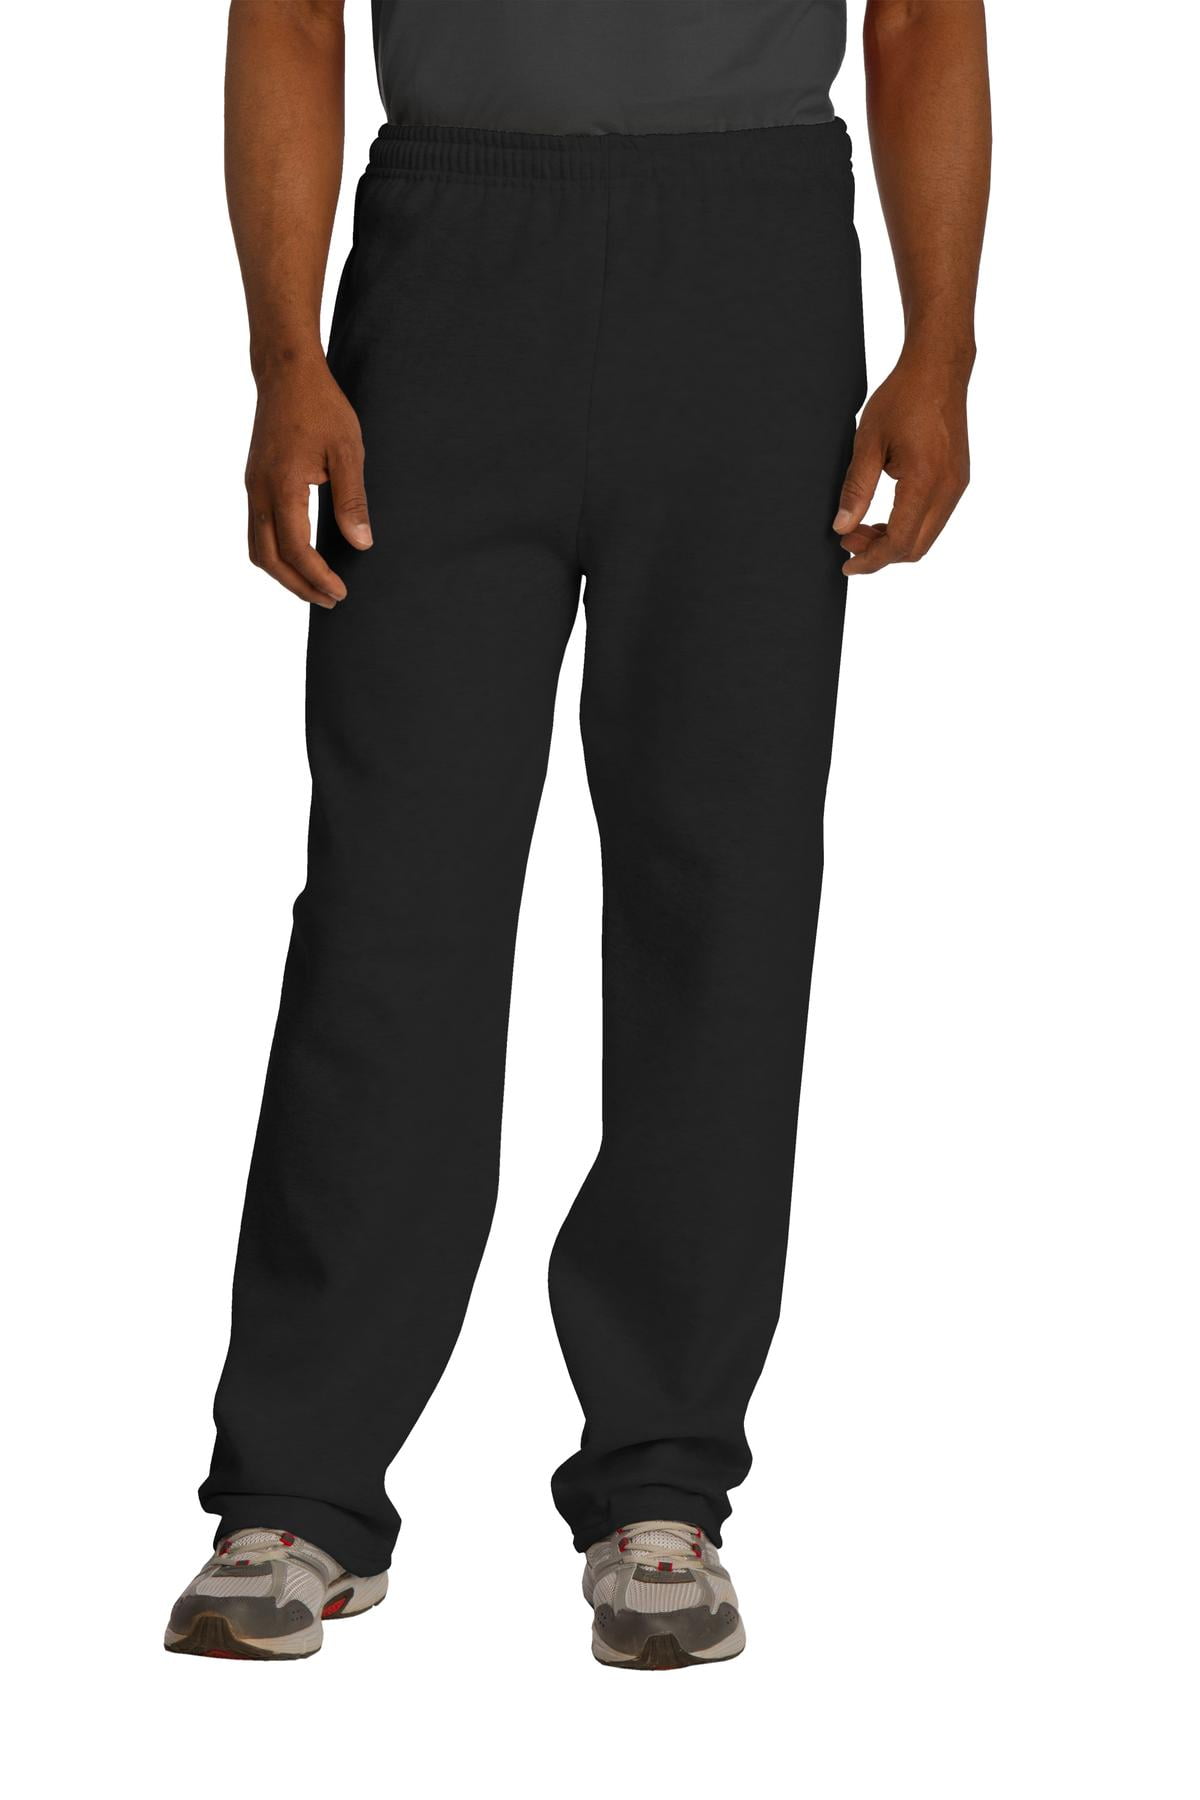 JERZEES NuBlend Open Bottom Pant with Pockets. - Walmart.com